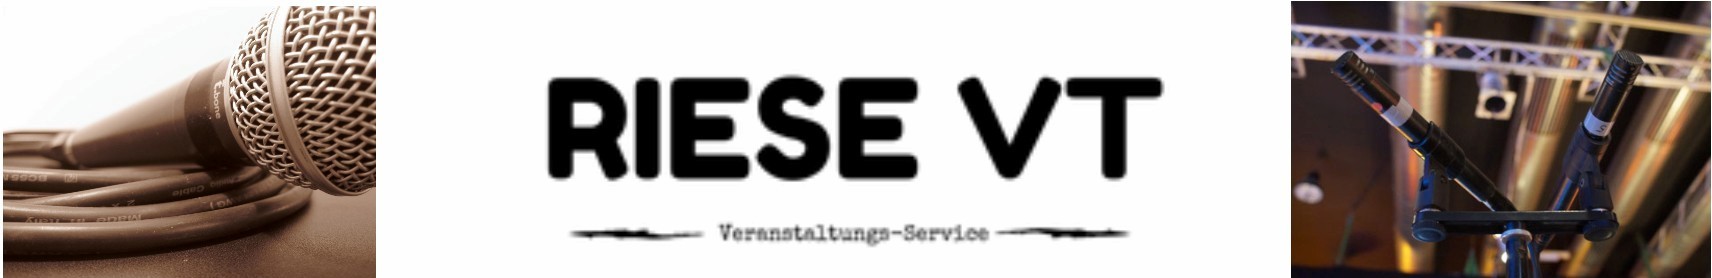 riese-vt-Banner-01